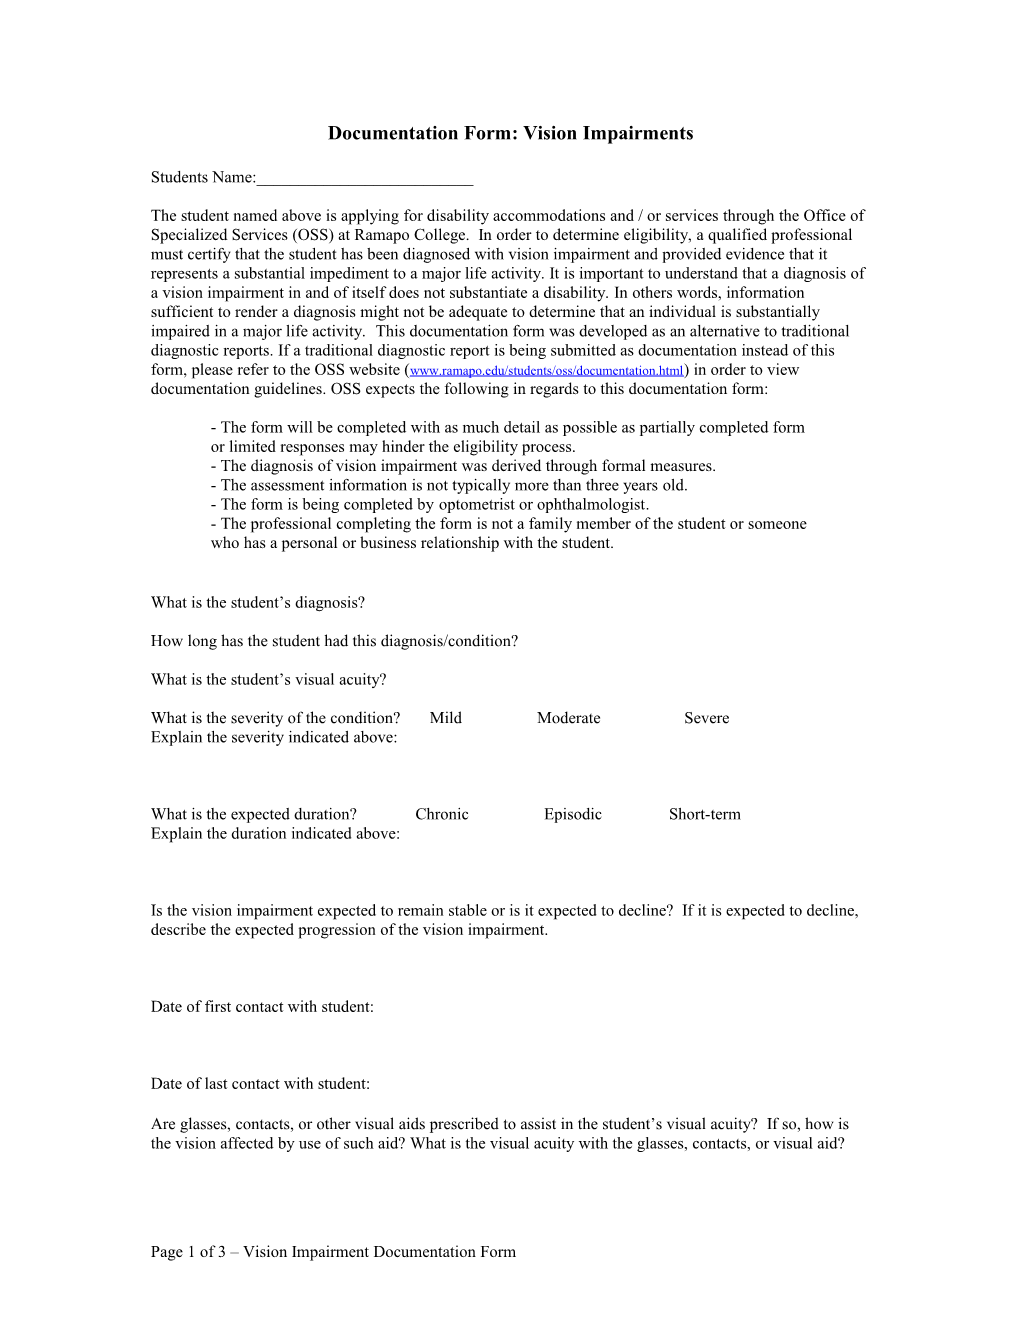 Documentation Form: Attention Deficit/Attention Deficit Hyperactivity Disorder (ADD/ADHD)